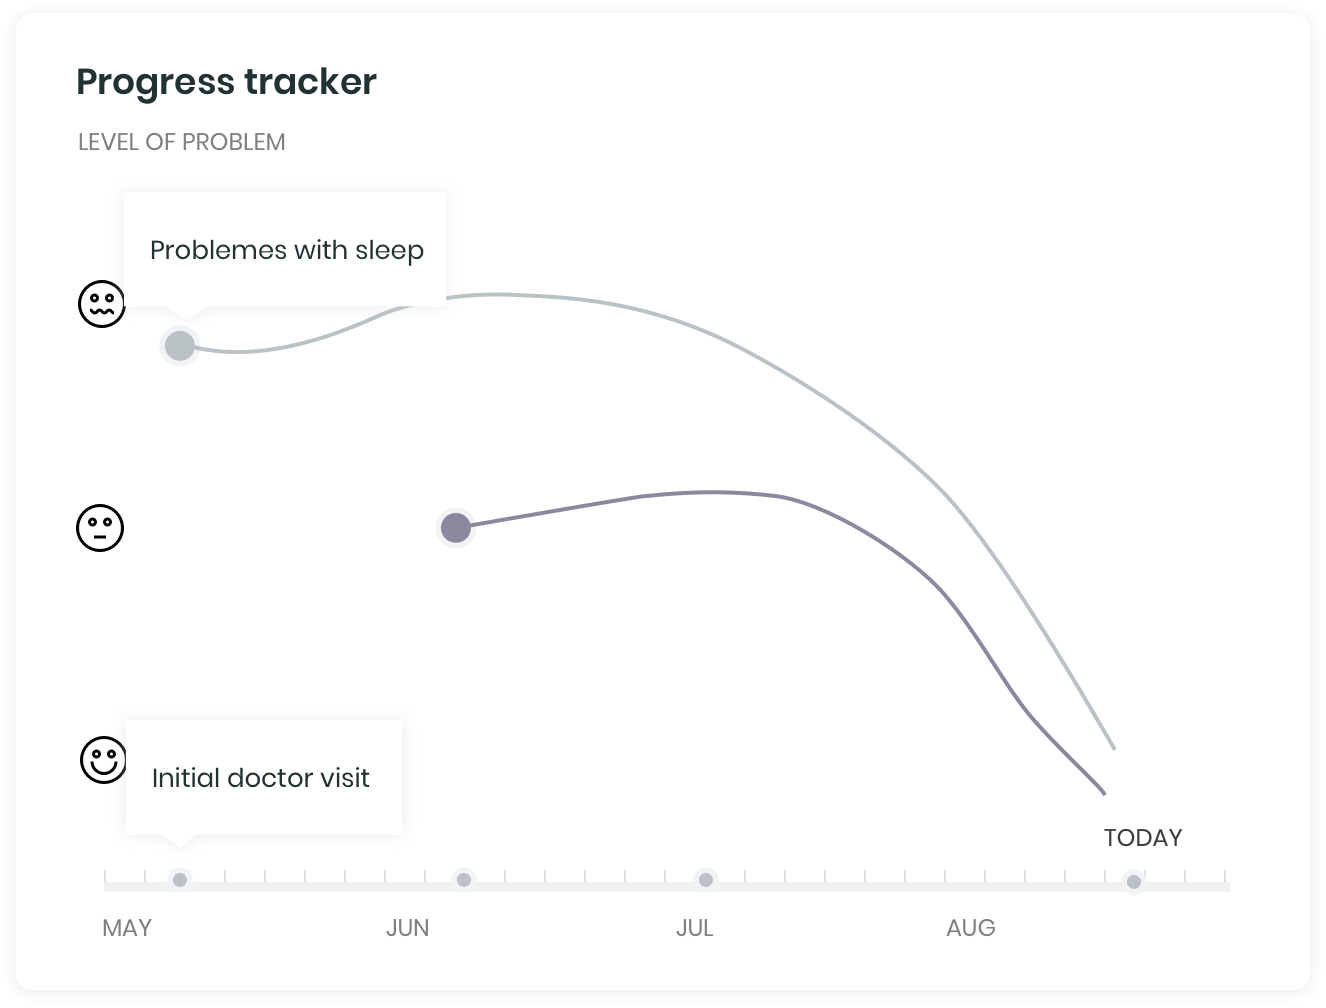 Progress tracker